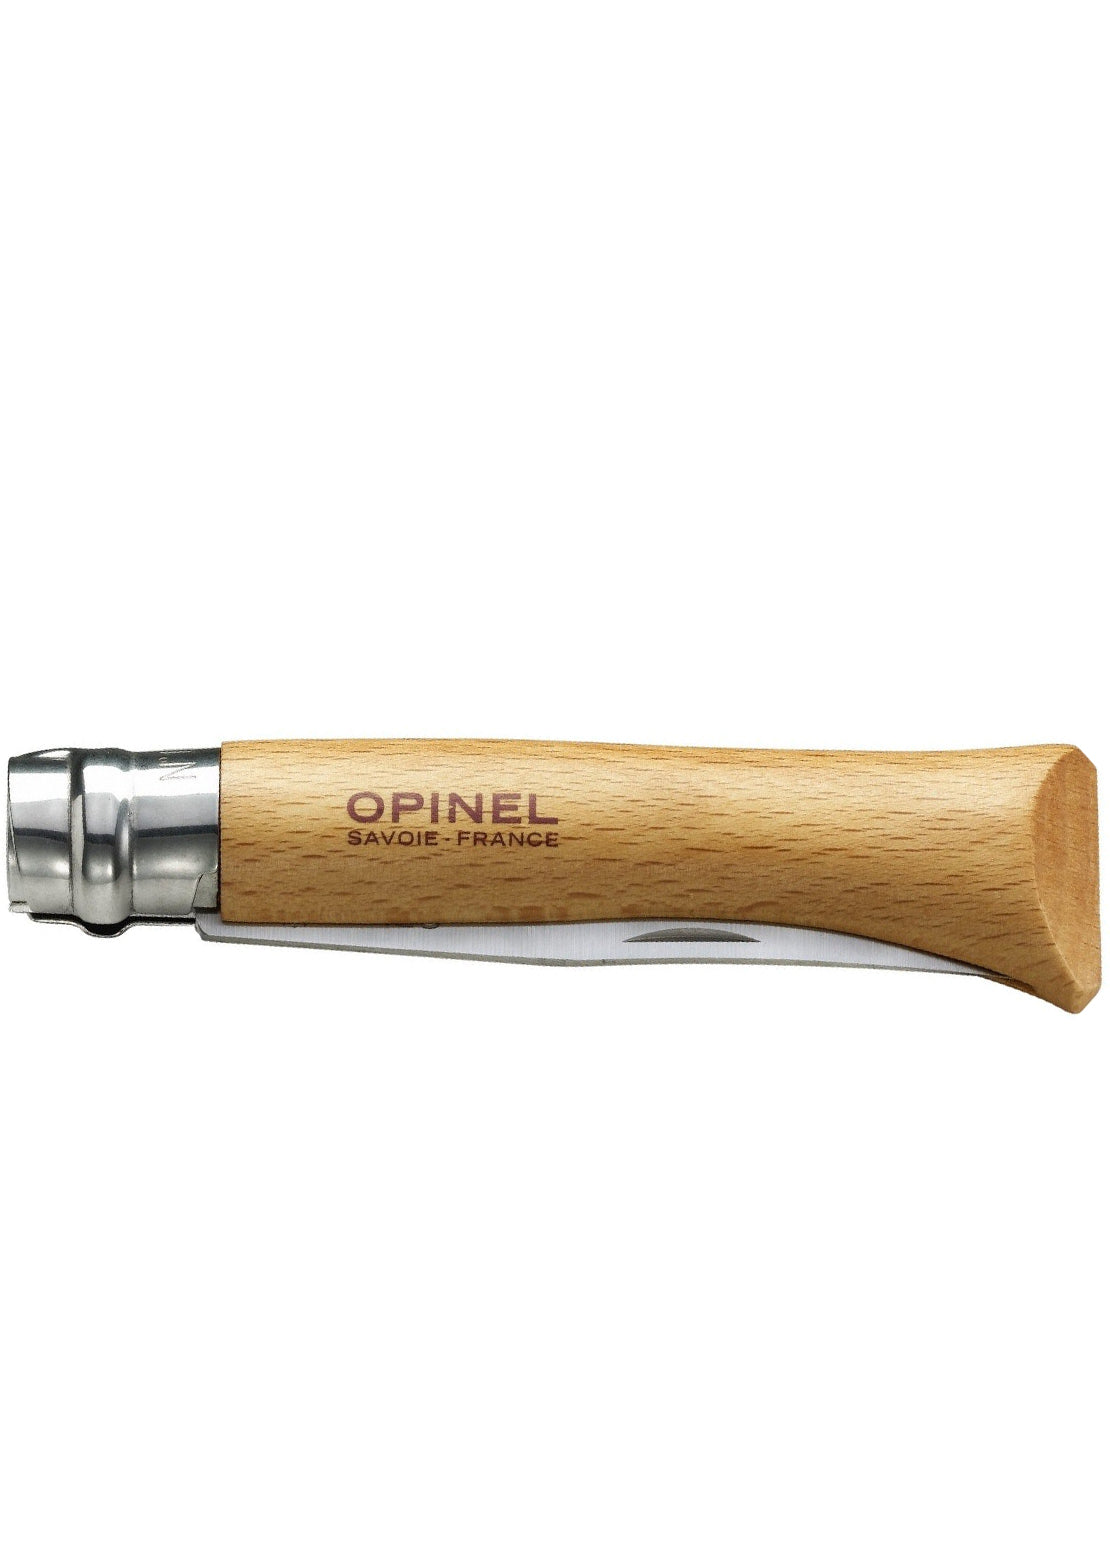 Opinel Tradition N°10 Gourmets Cork-Screw Knife Beech Wood